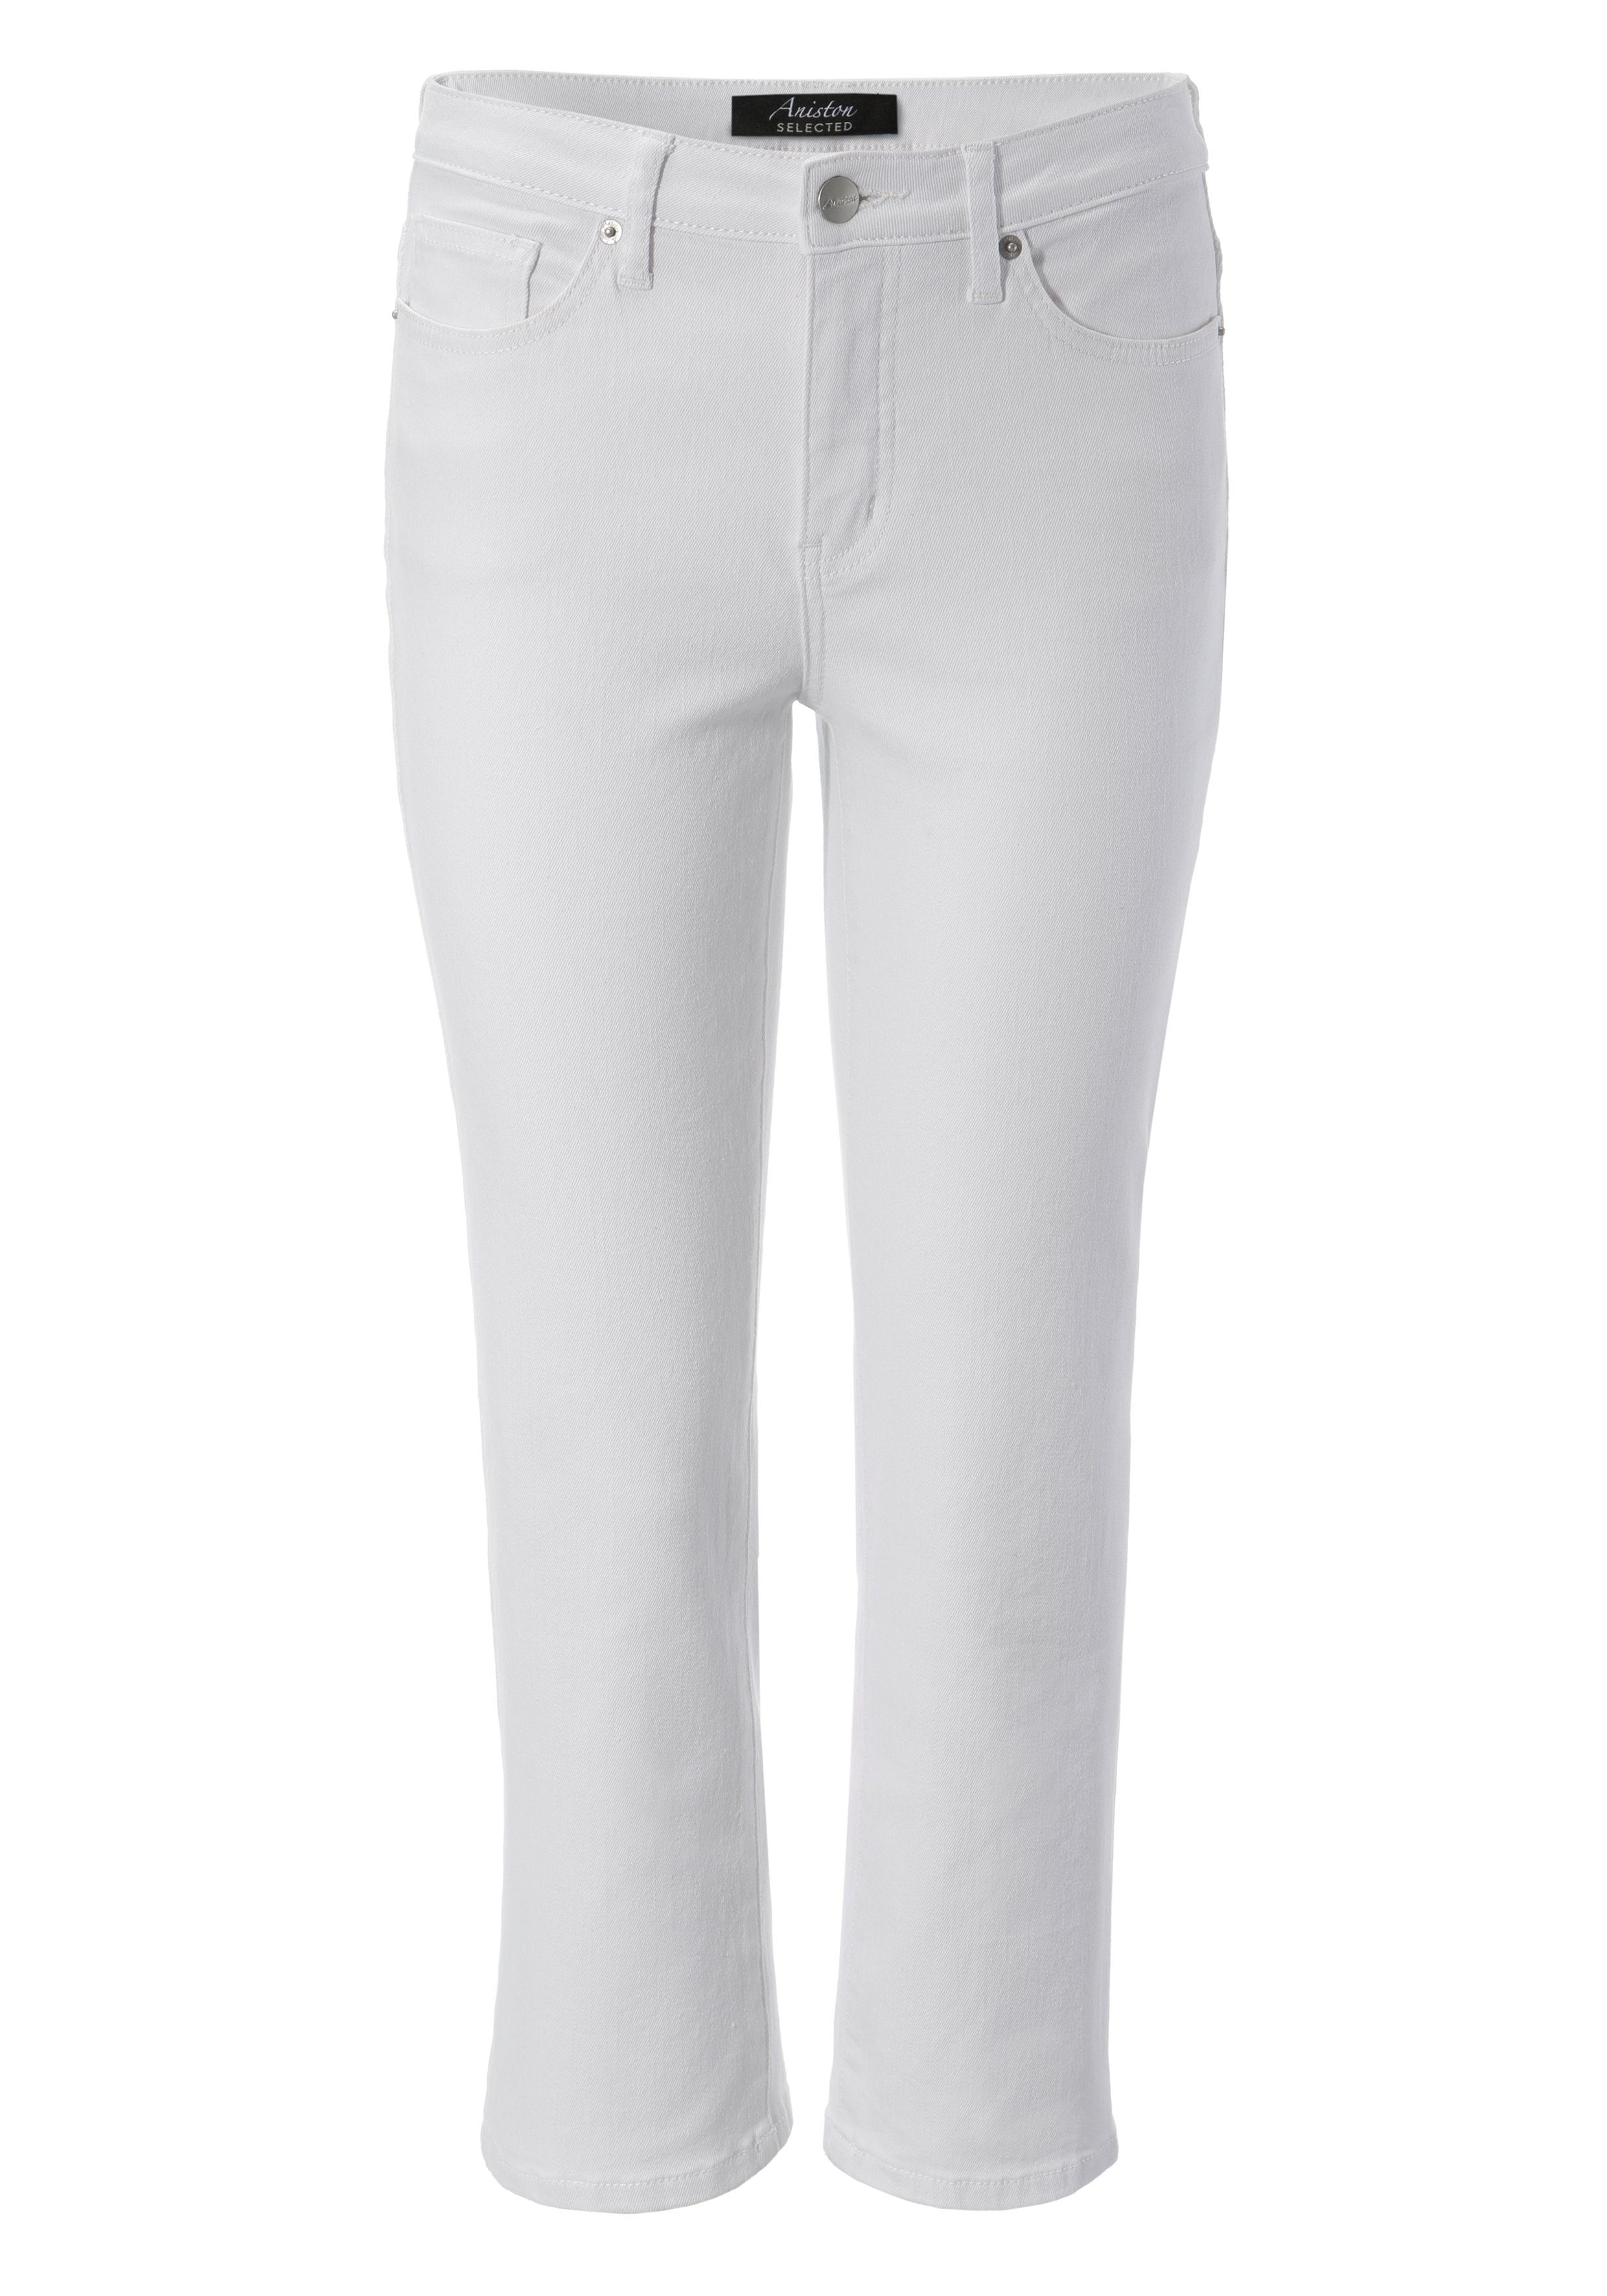 Aniston SELECTED Straight-Jeans in verkürzter cropped Länge weiß